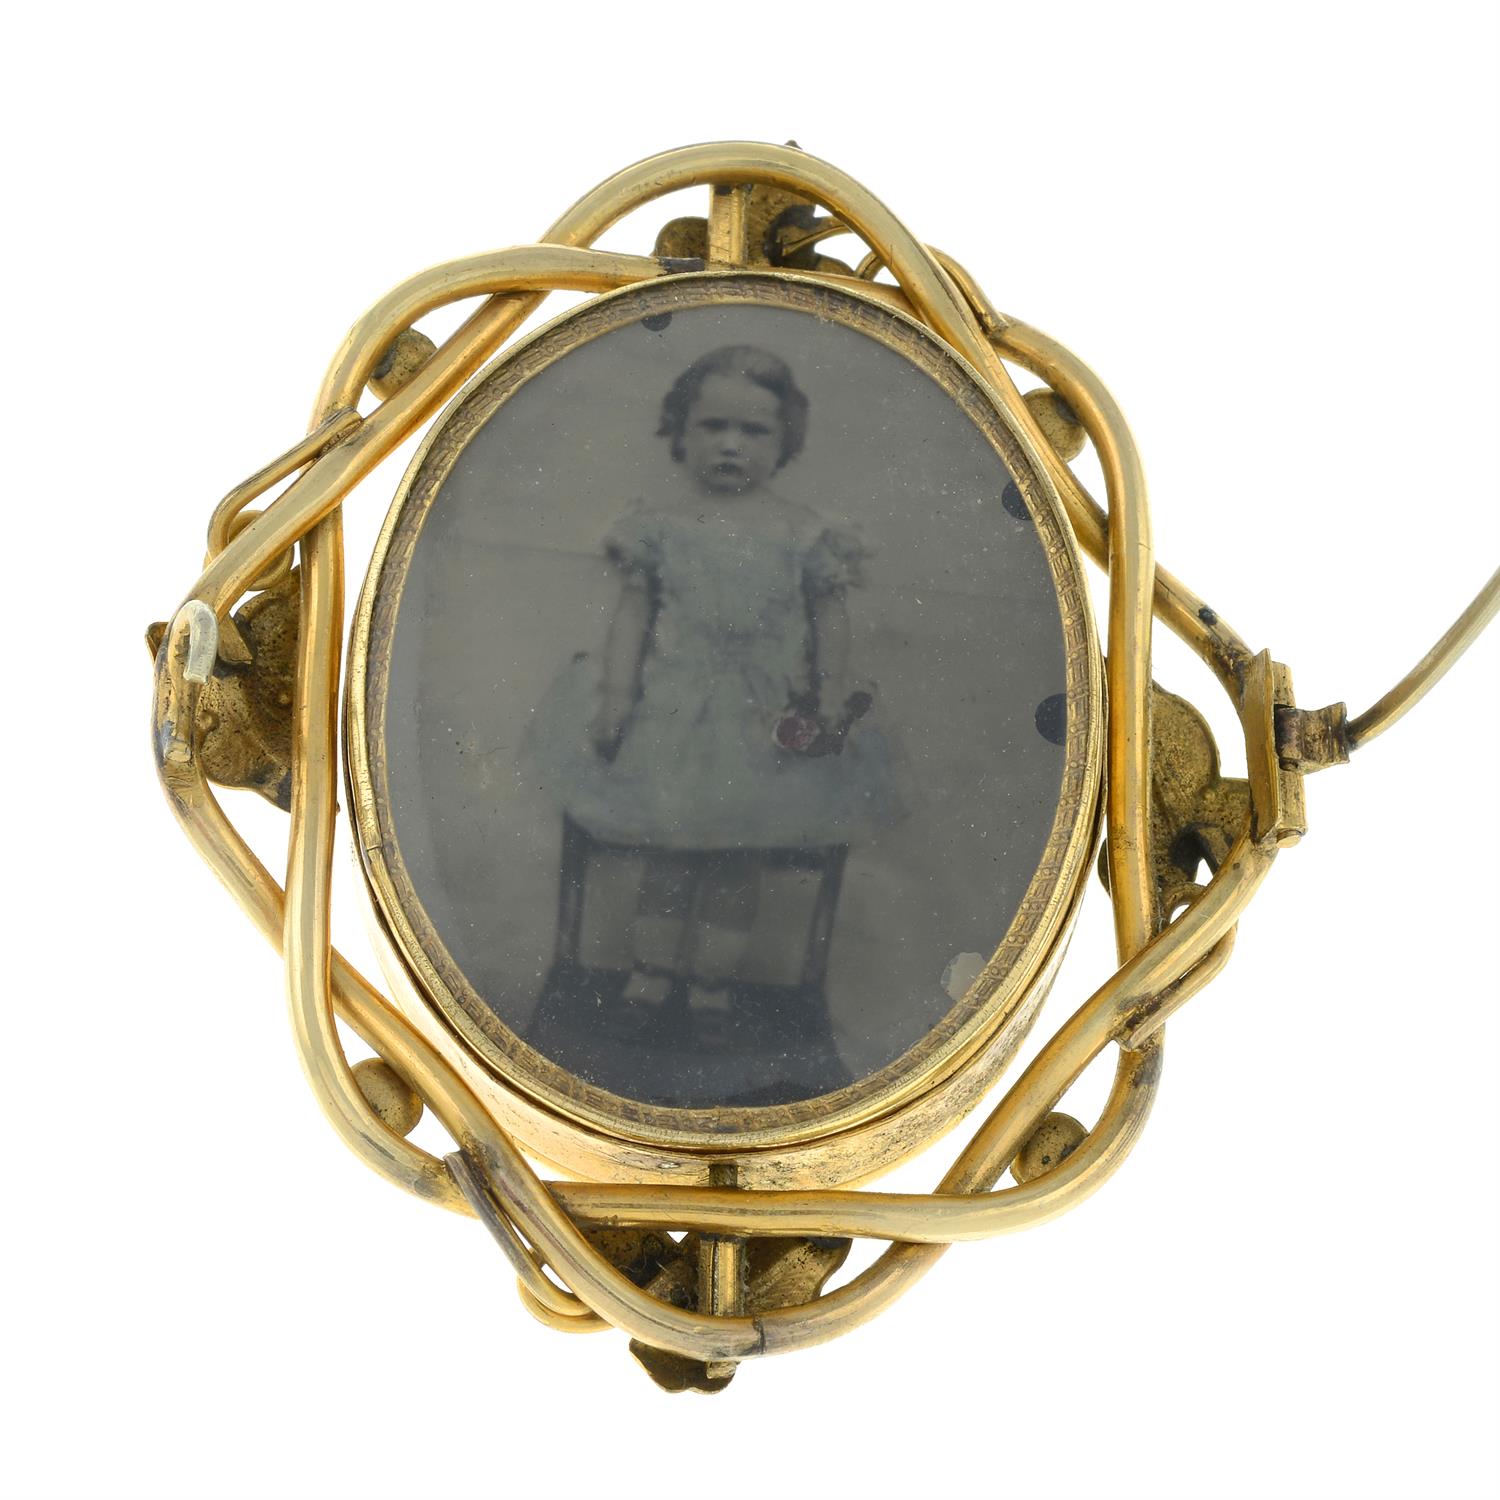 Late 19th century gilted metal hairwork swivel memorial brooch - Image 2 of 3